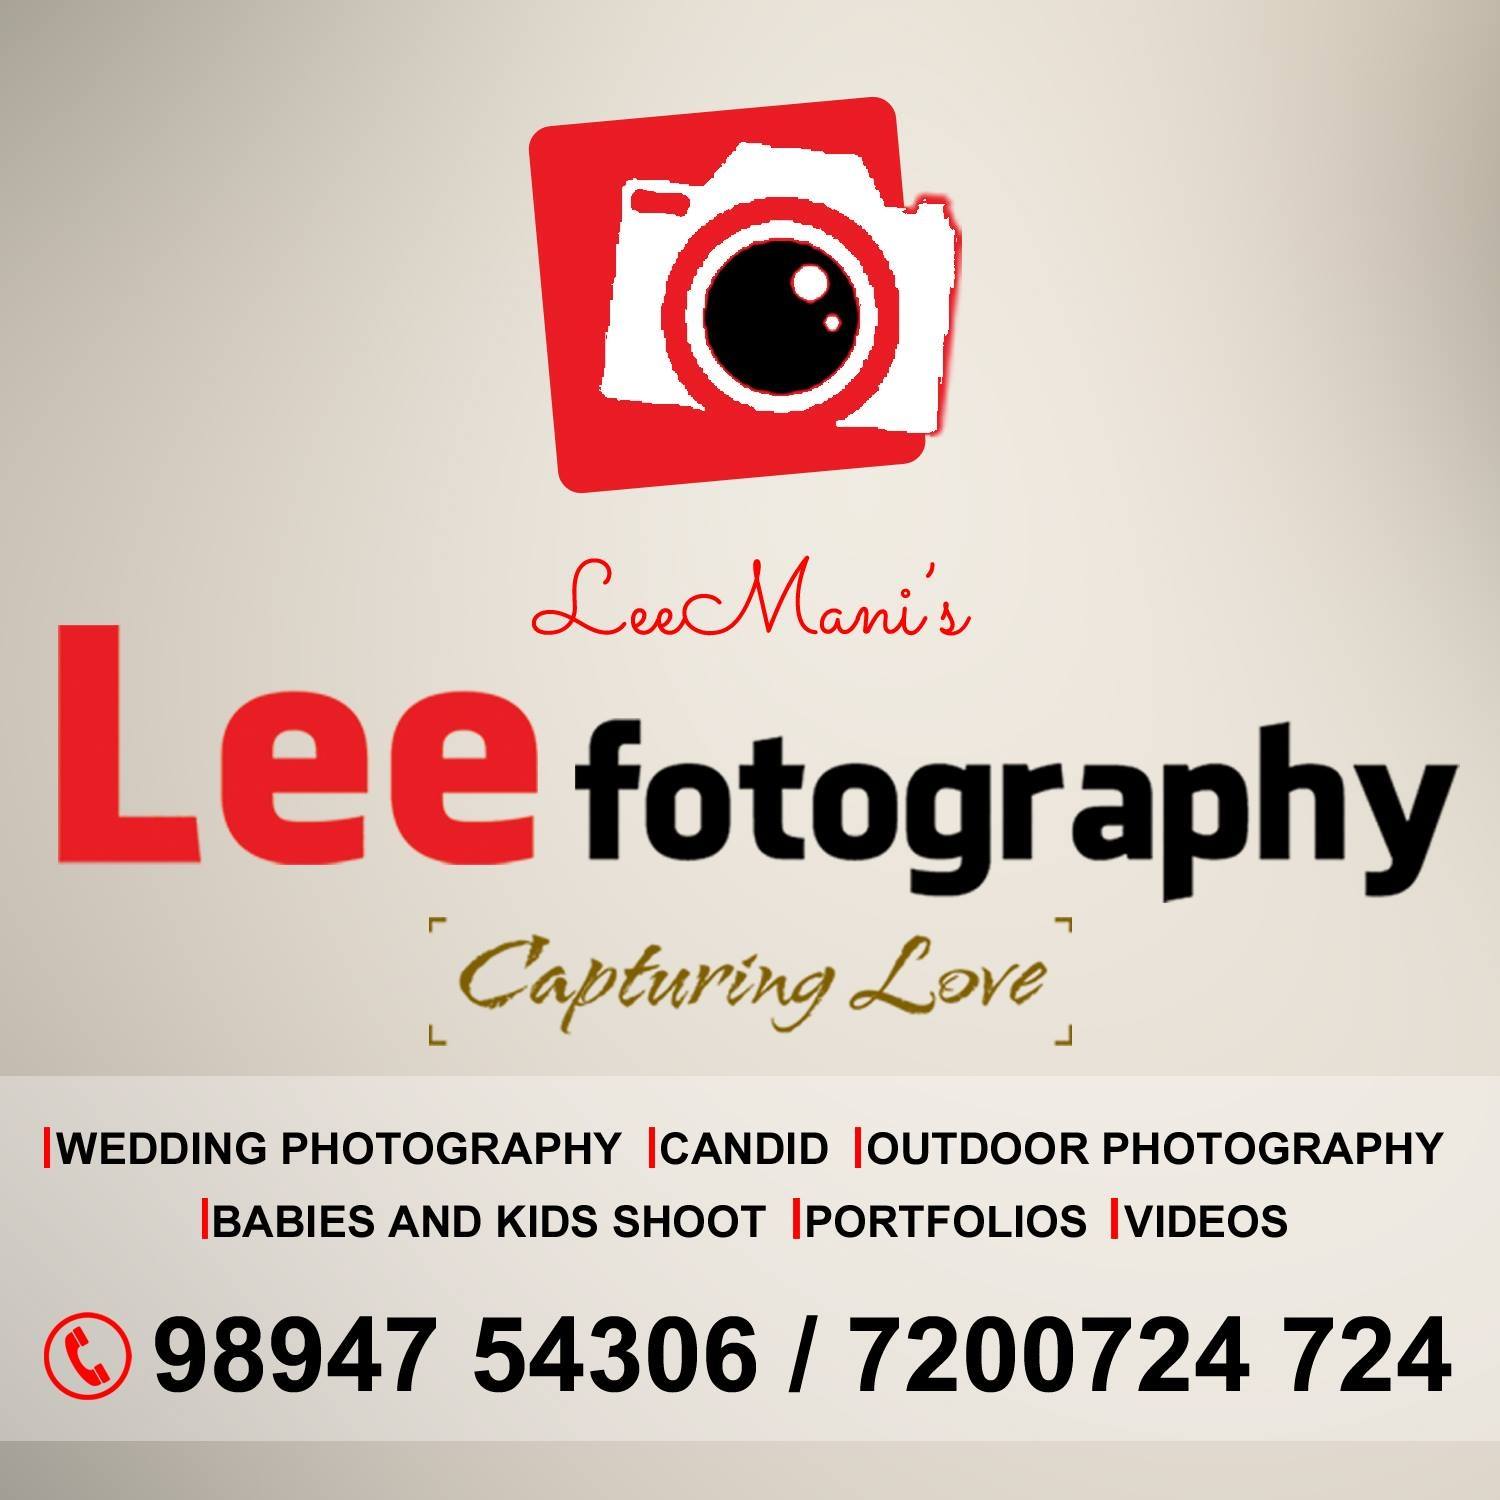 LeeFotography|Photographer|Event Services